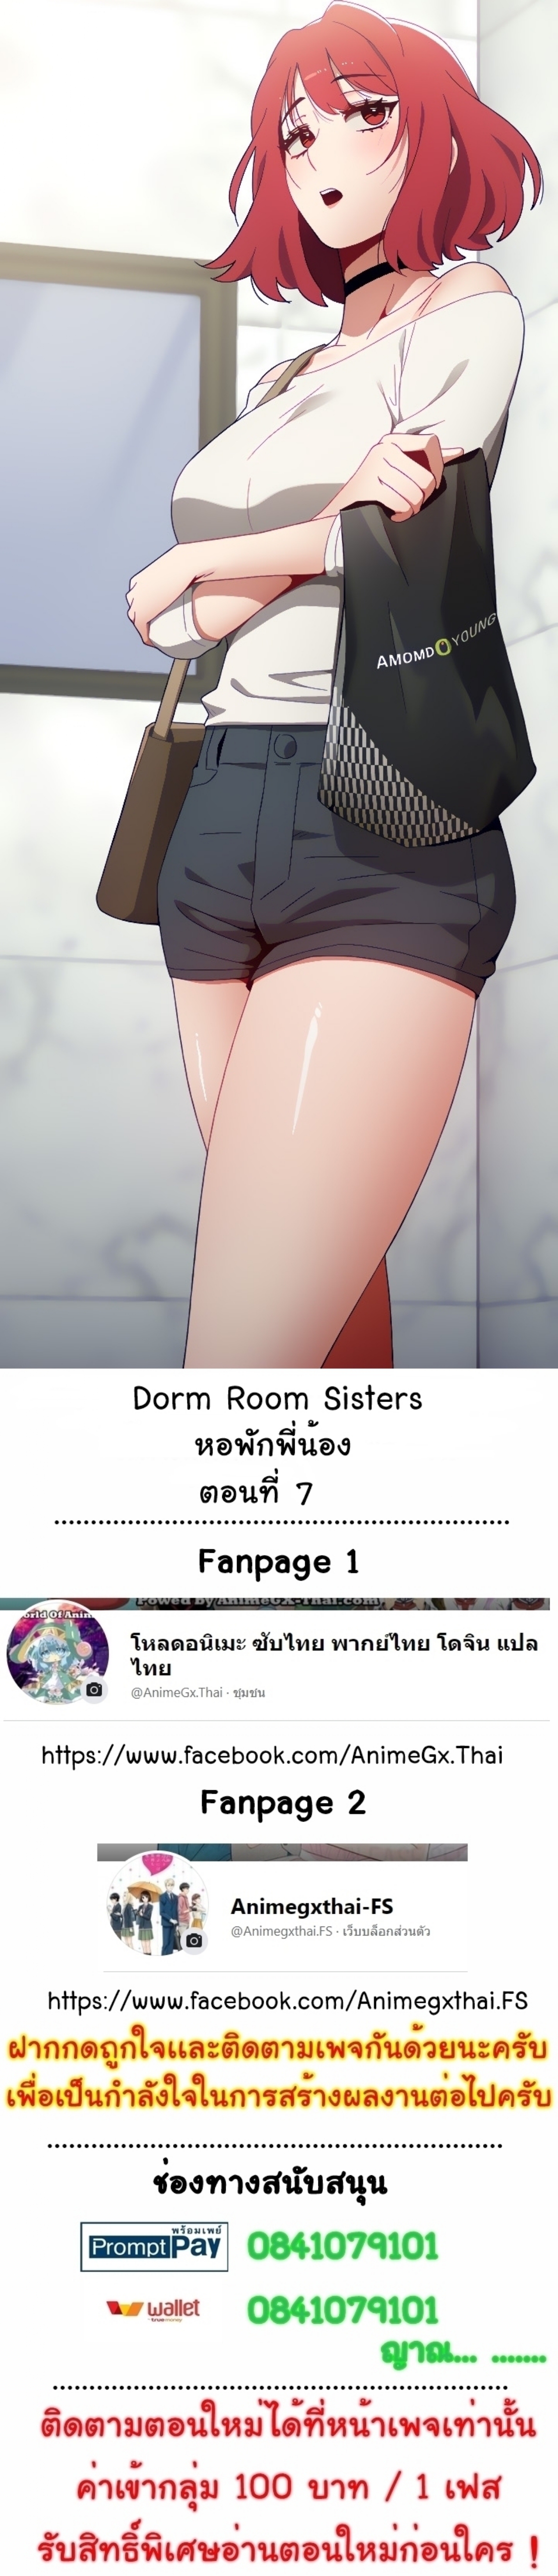 Dorm Room Sisters 7 1